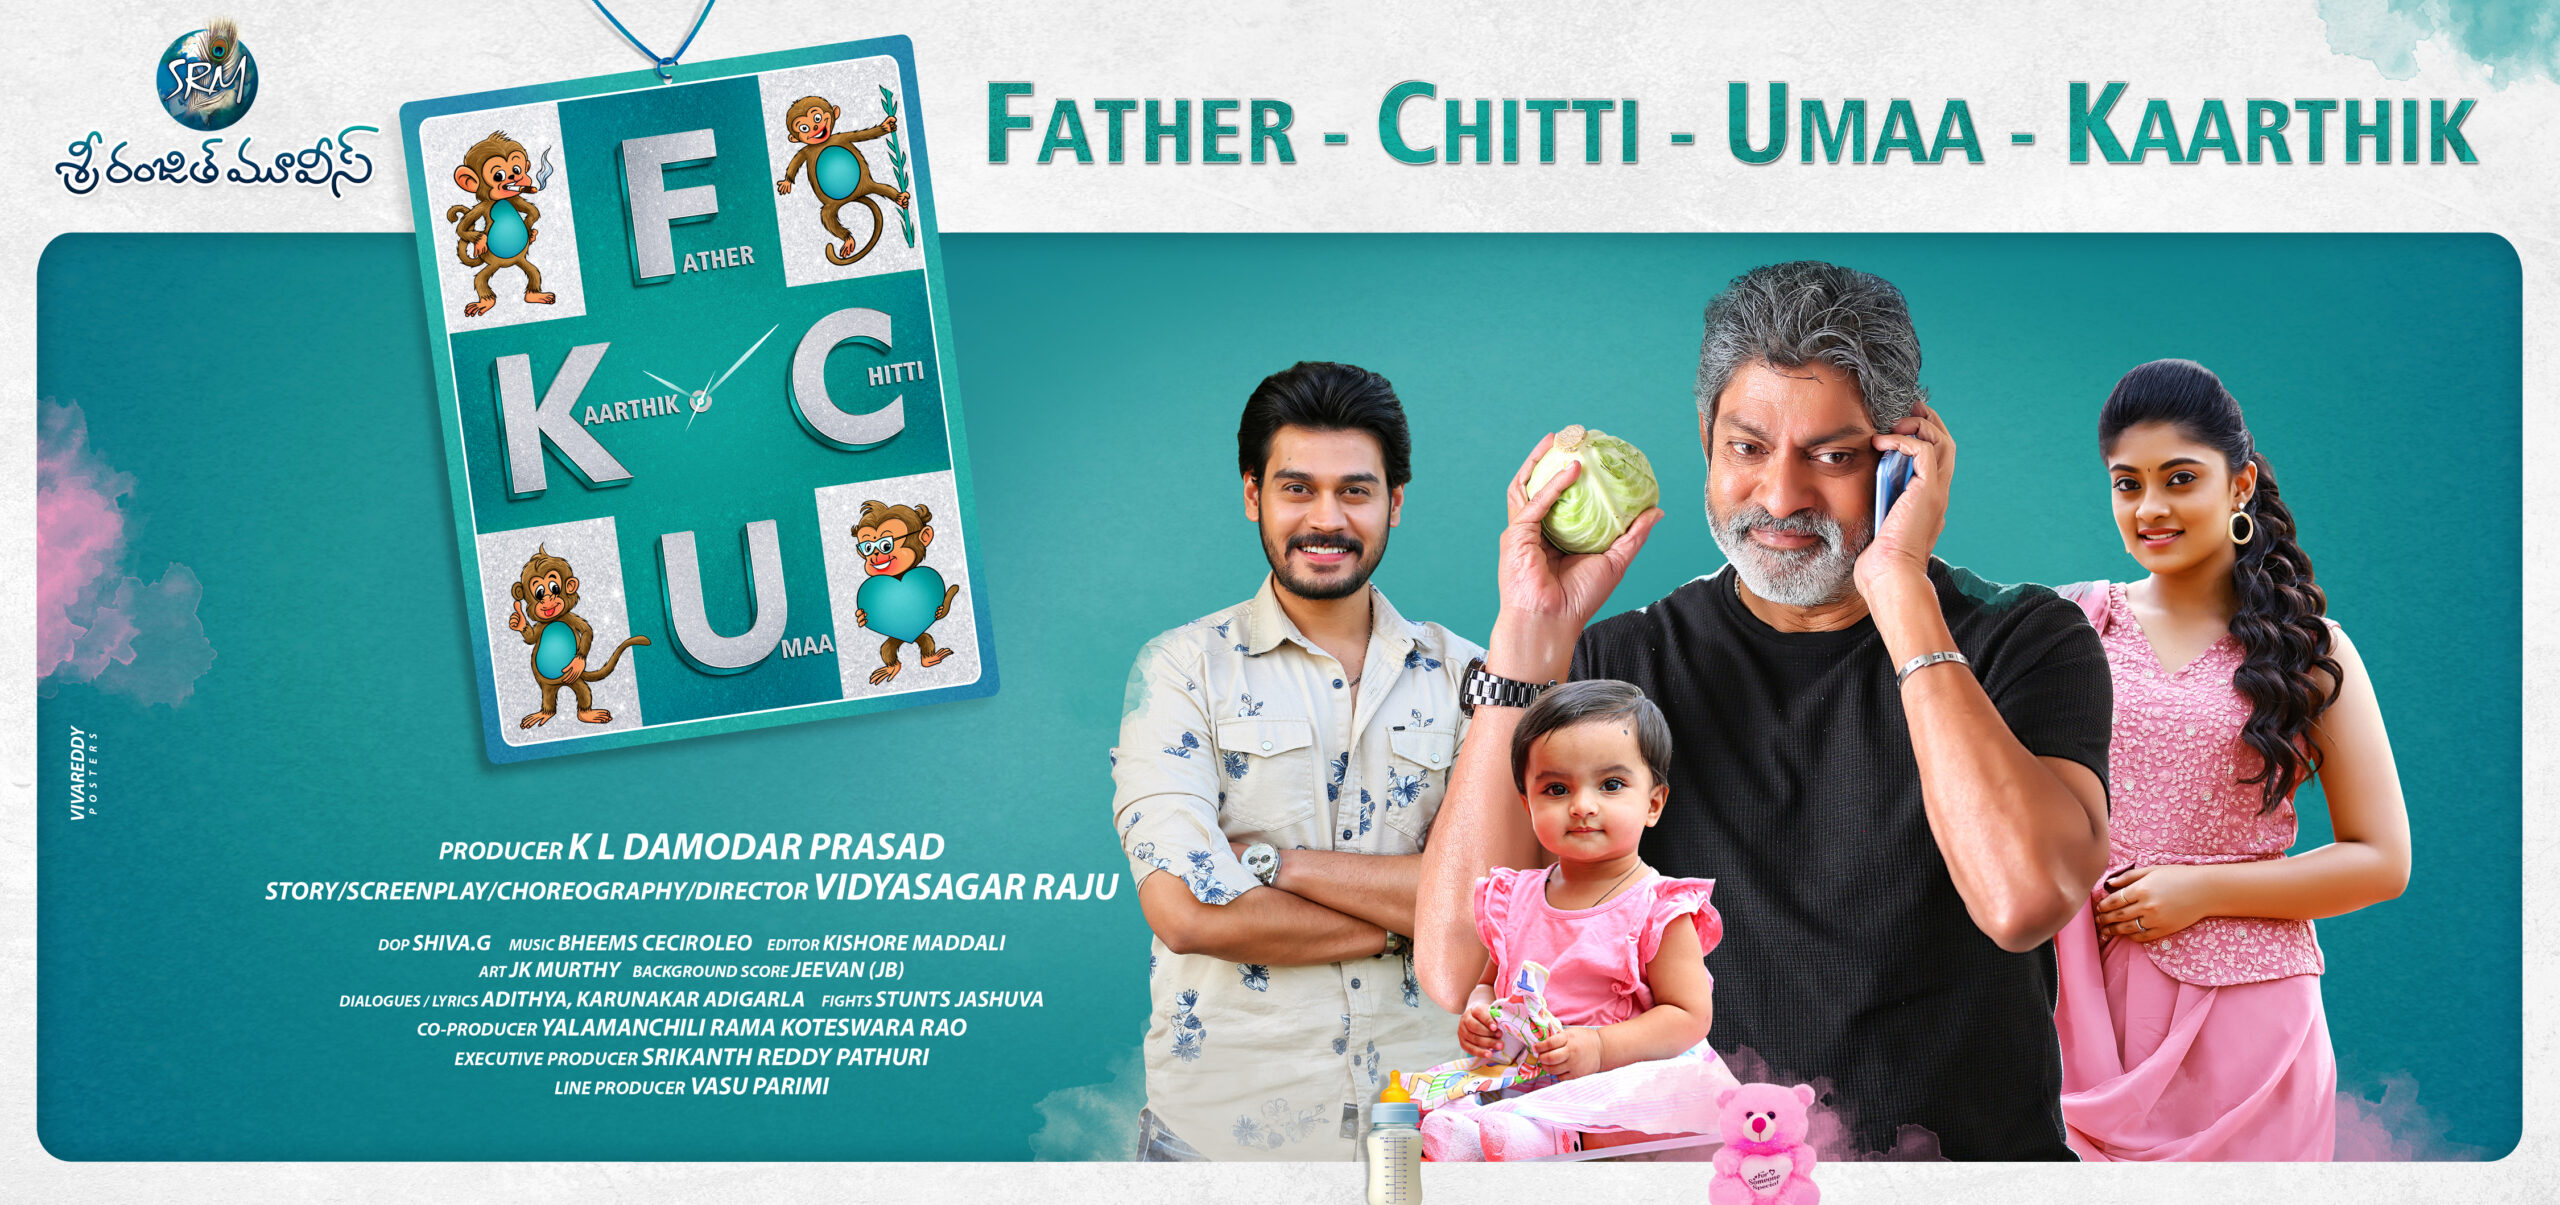 CompleteLook of FCUK movie (Father Chitti Umaa Kaarthik)